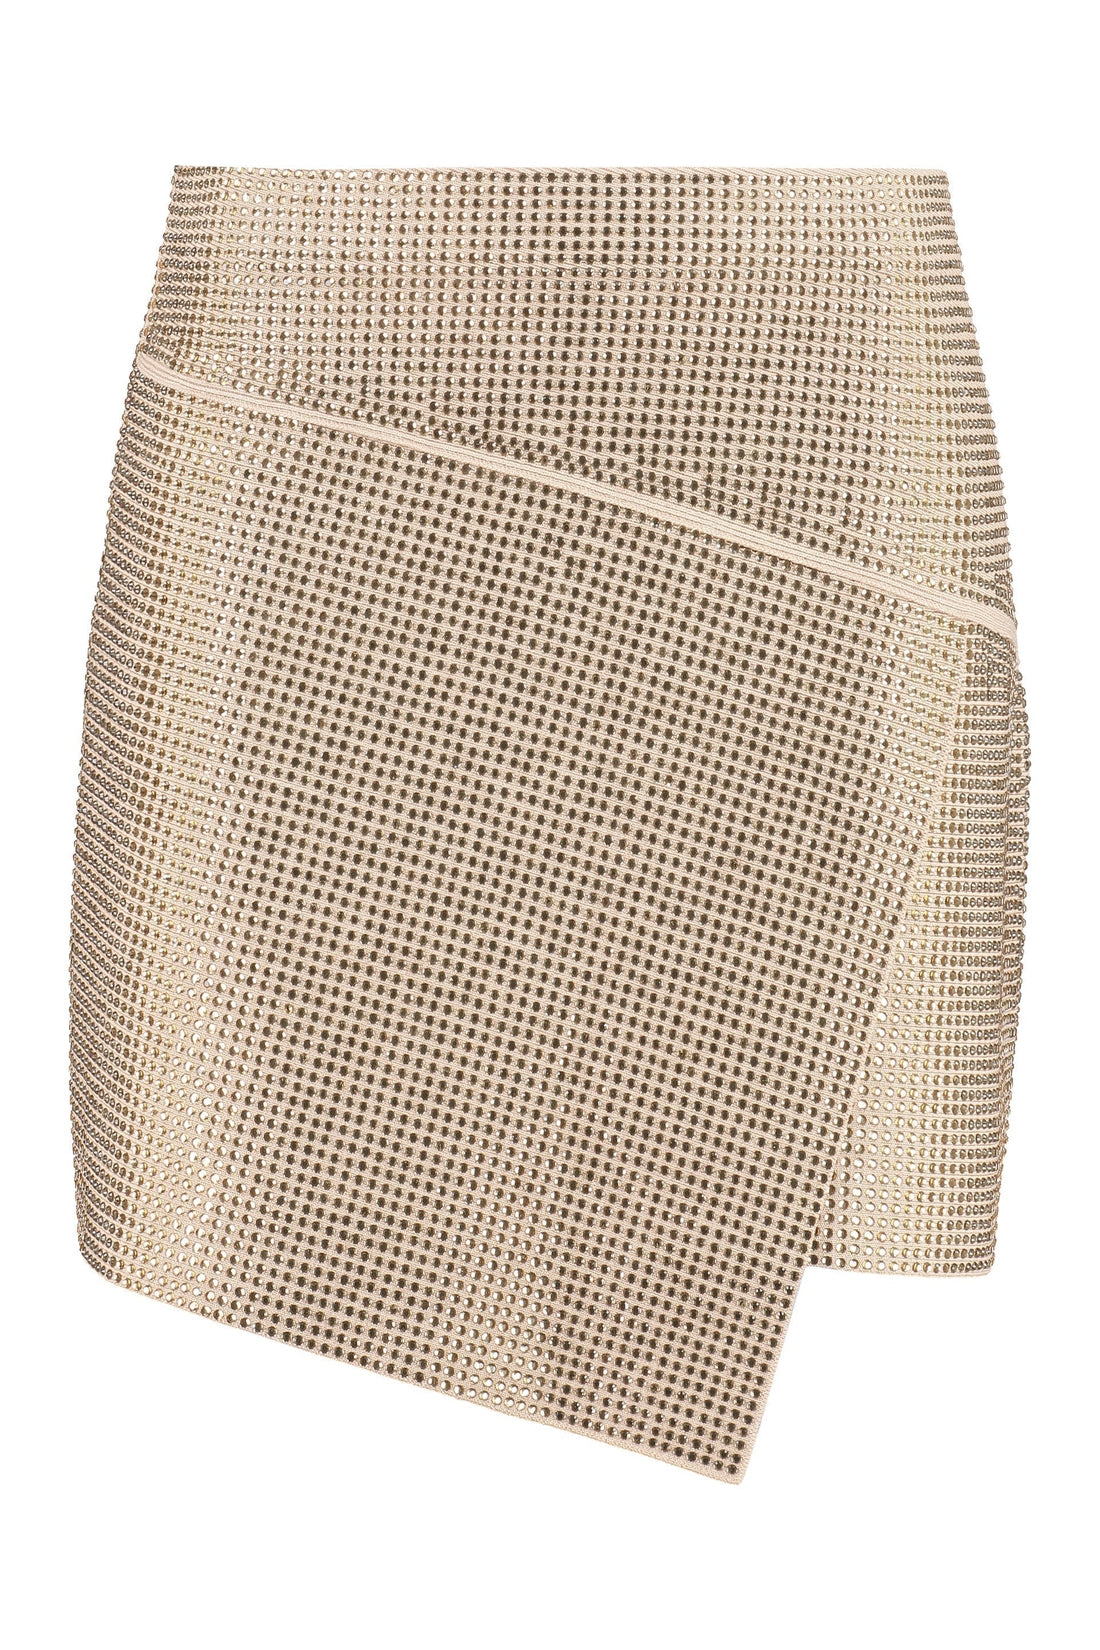 ANDREADAMO-OUTLET-SALE-Asymmetric miniskirt-ARCHIVIST